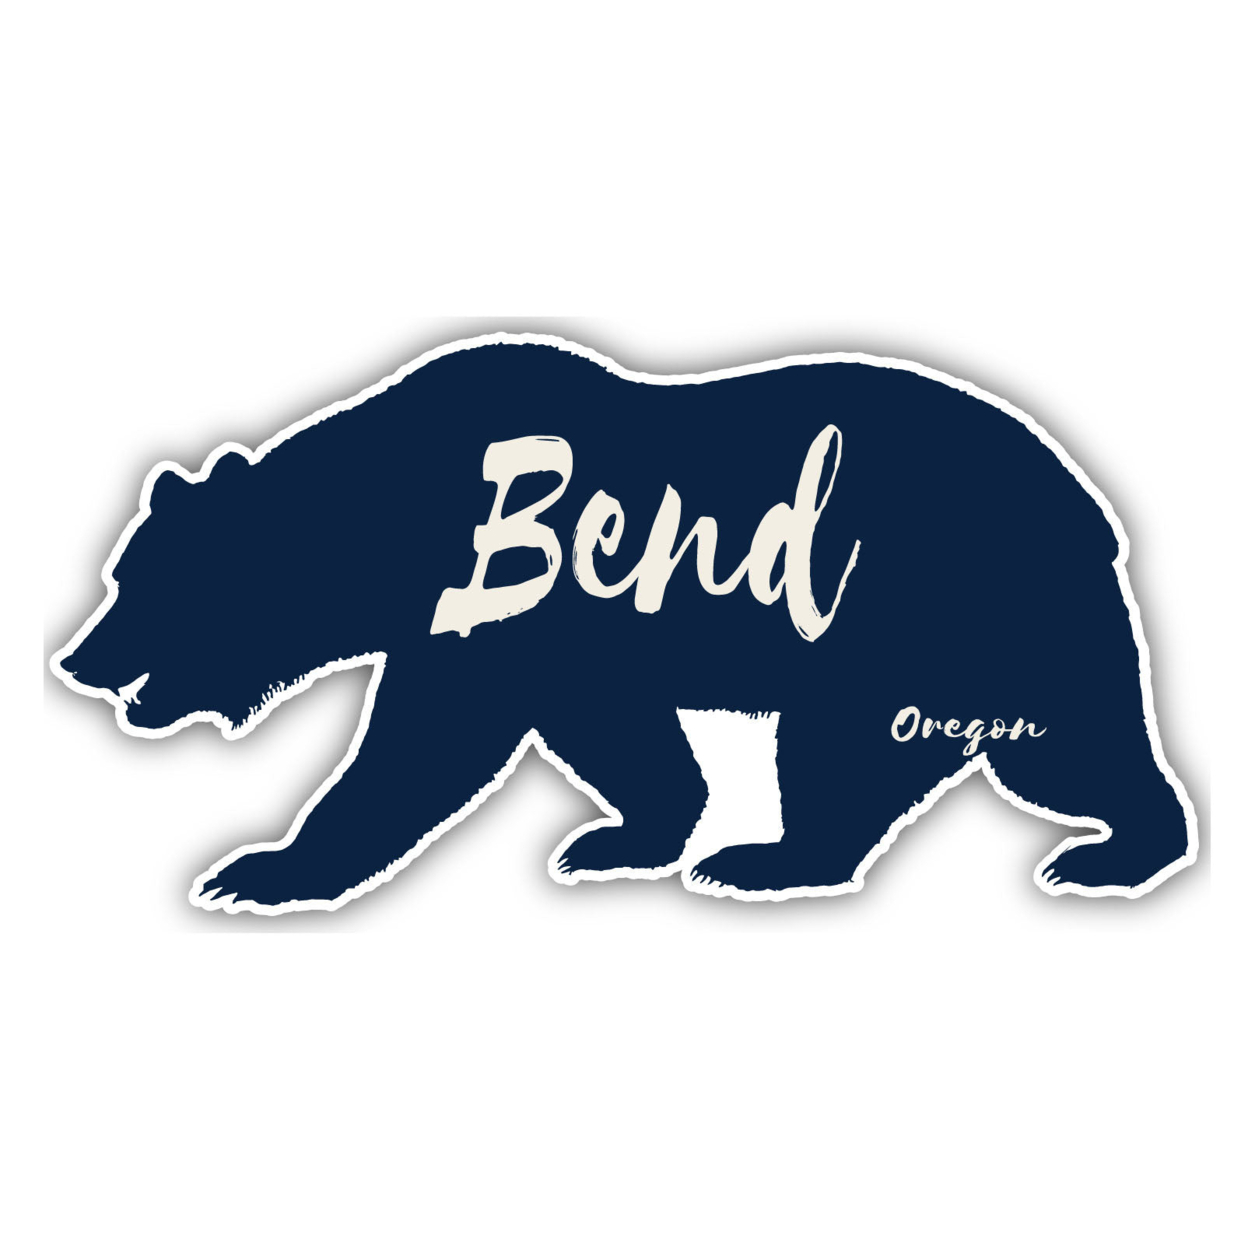 Bend Oregon Souvenir Decorative Stickers (Choose Theme And Size) - Single Unit, 4-Inch, Bear